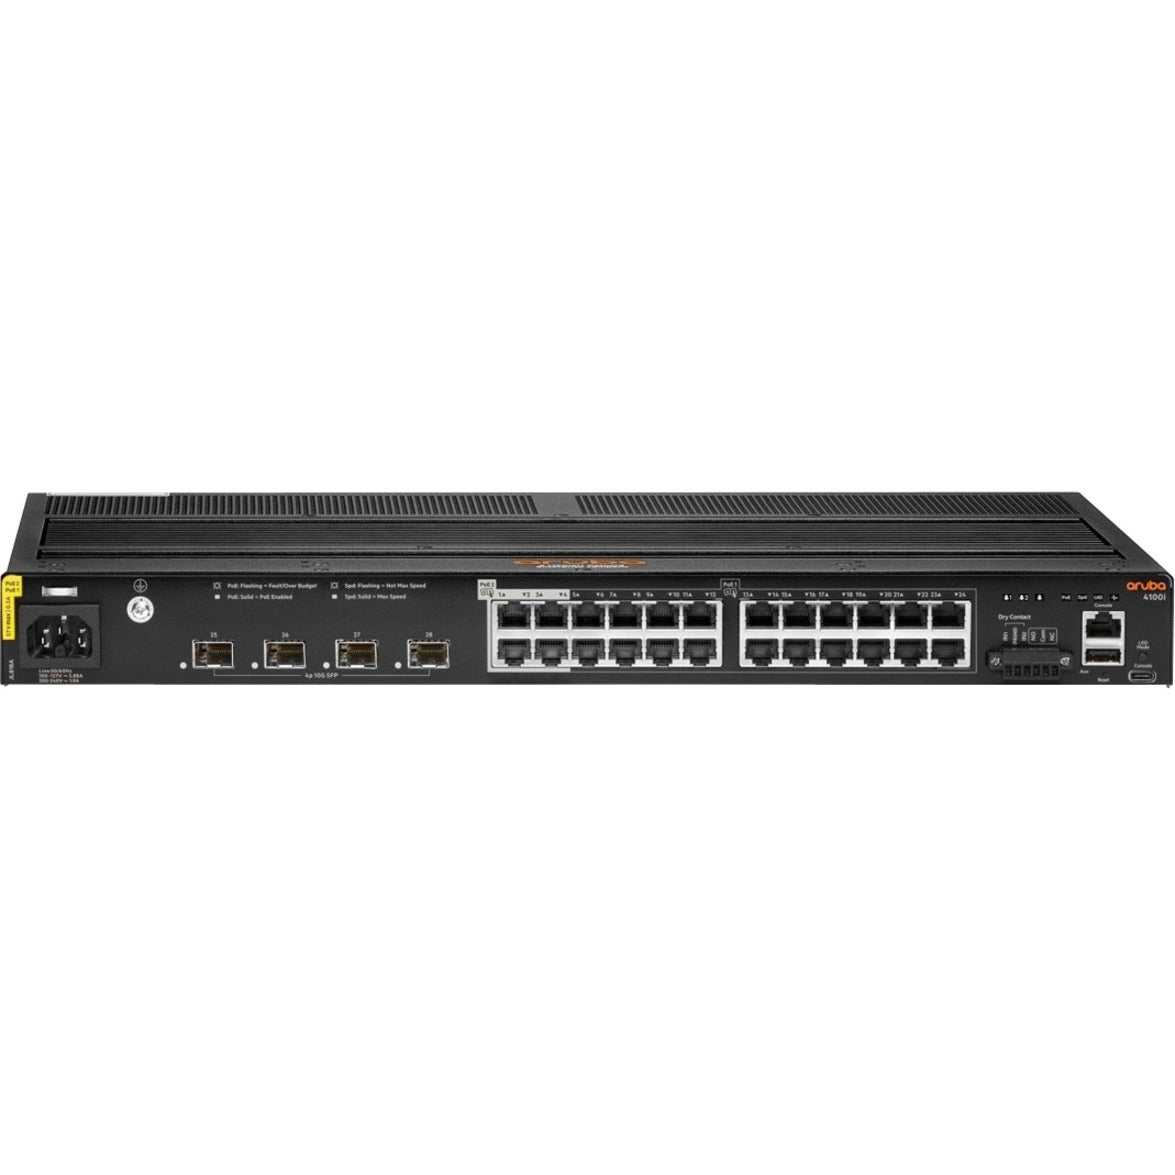 Aruba CX 4100i Ethernet Switch, 24-Port 1GbE, 4x 10GbE Expansion Slots, 240W PoE